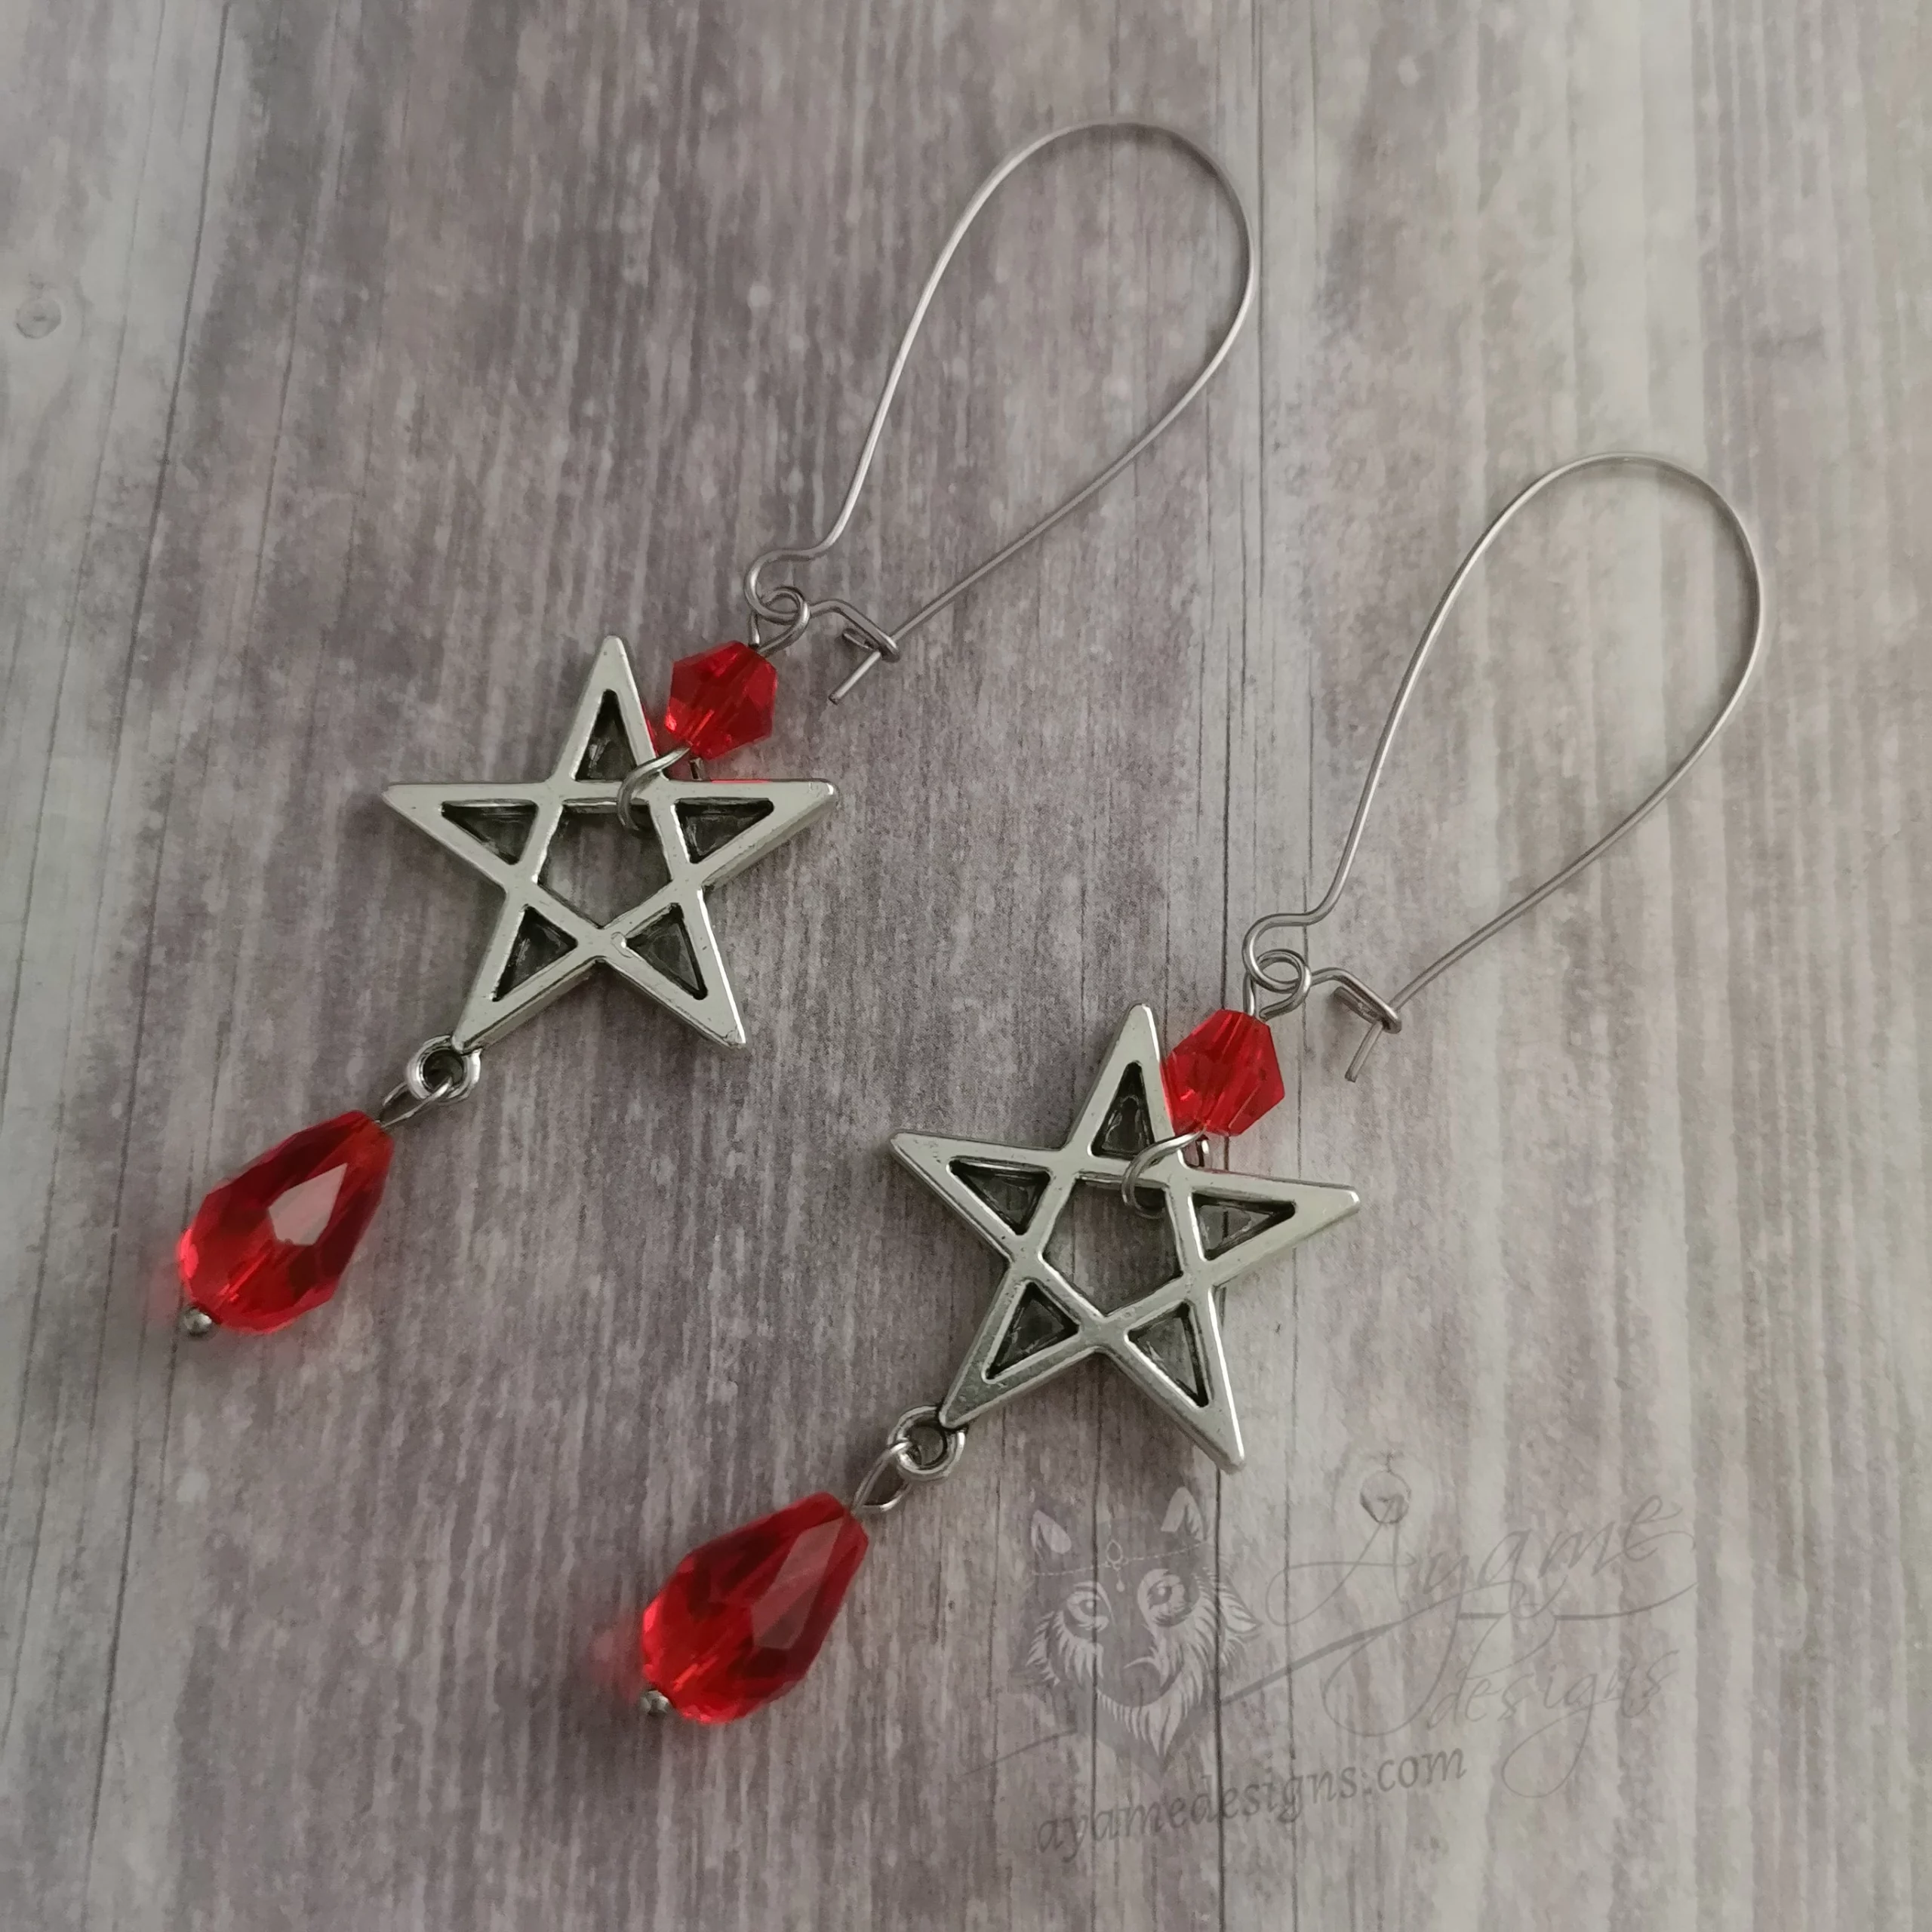 Handmade pentagram earrings with red Austrian crystal beads and stainless steel large kidney earring hooks